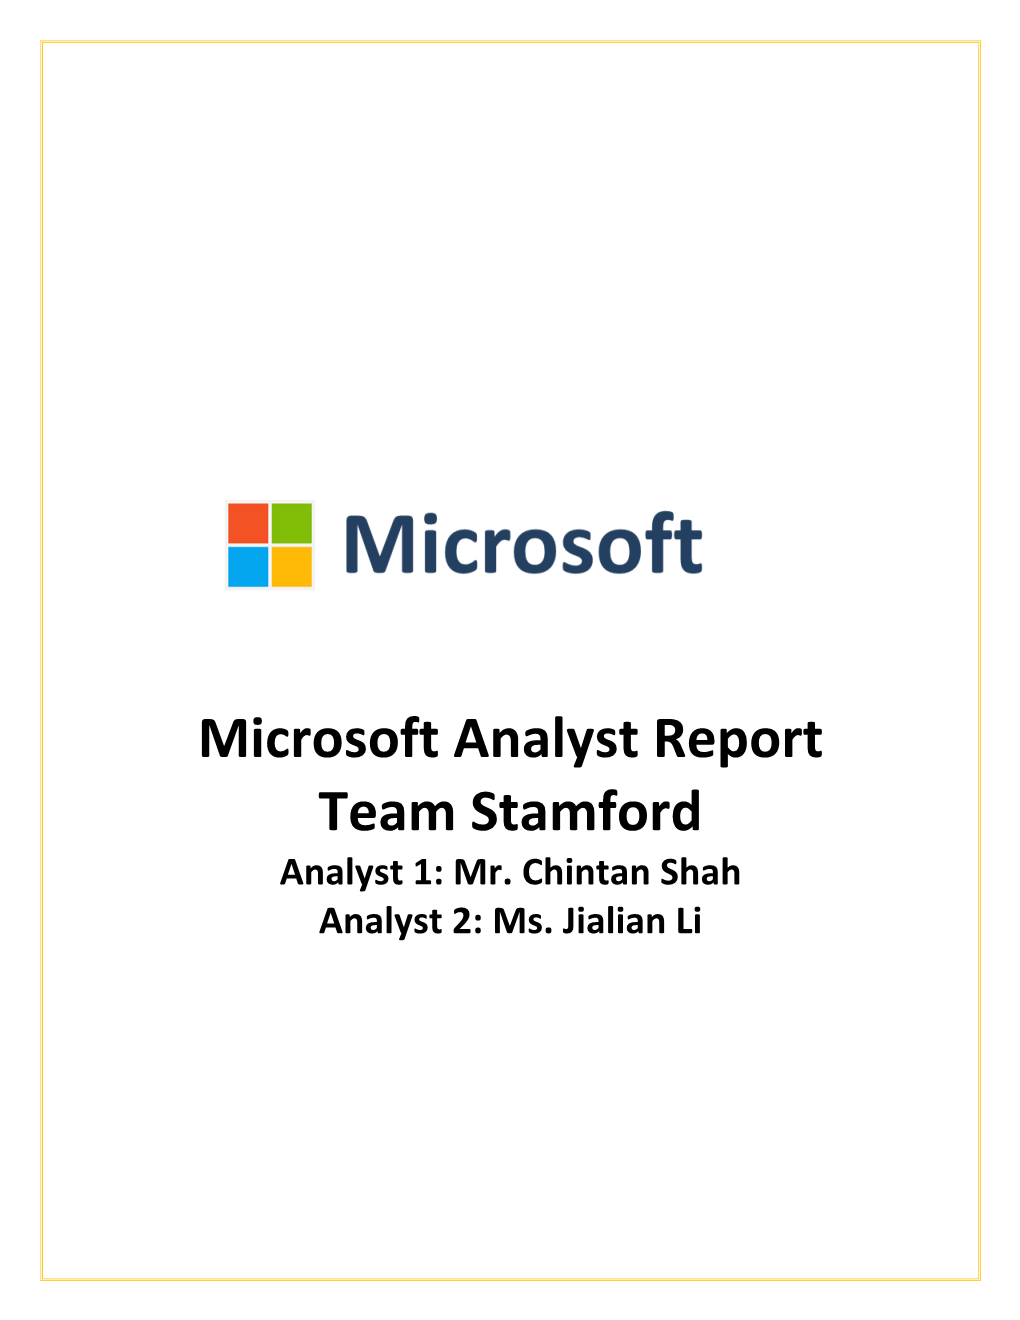 Microsoft Analyst Report Team Stamford Analyst 1: Mr